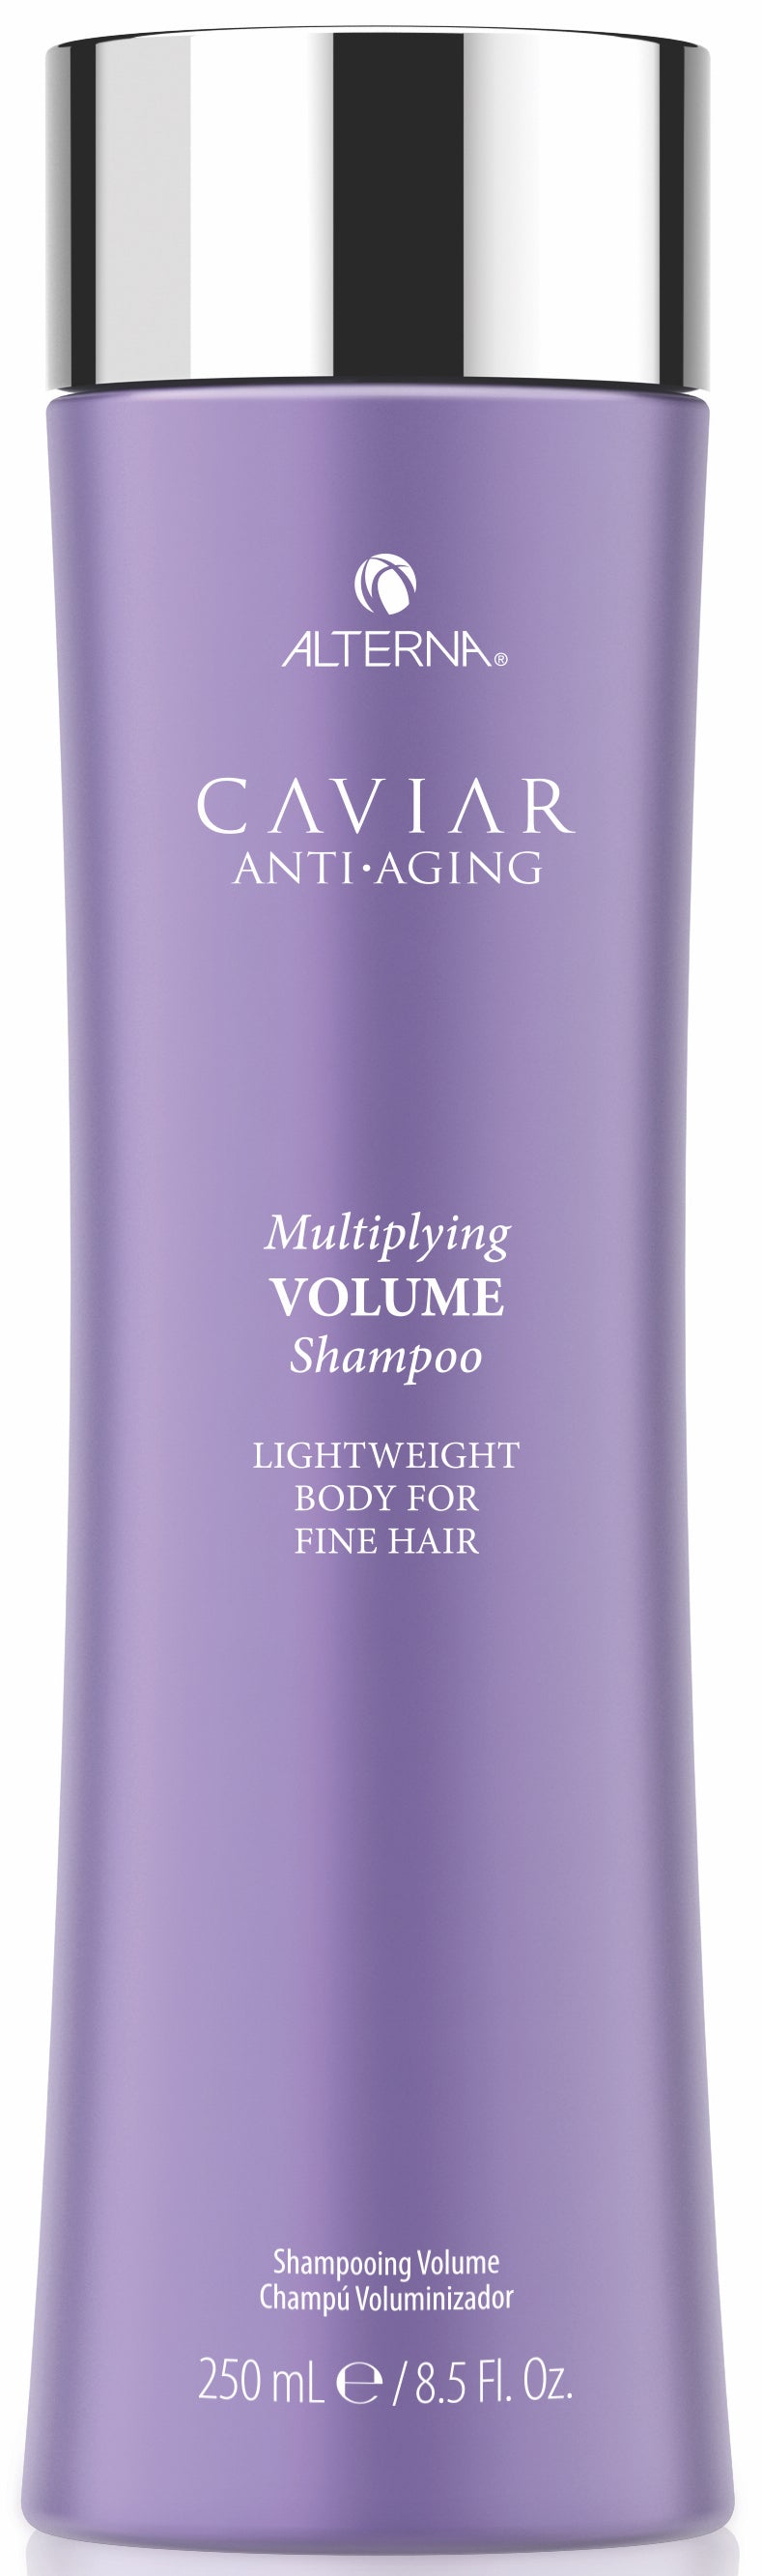 multiplying volume shampoo